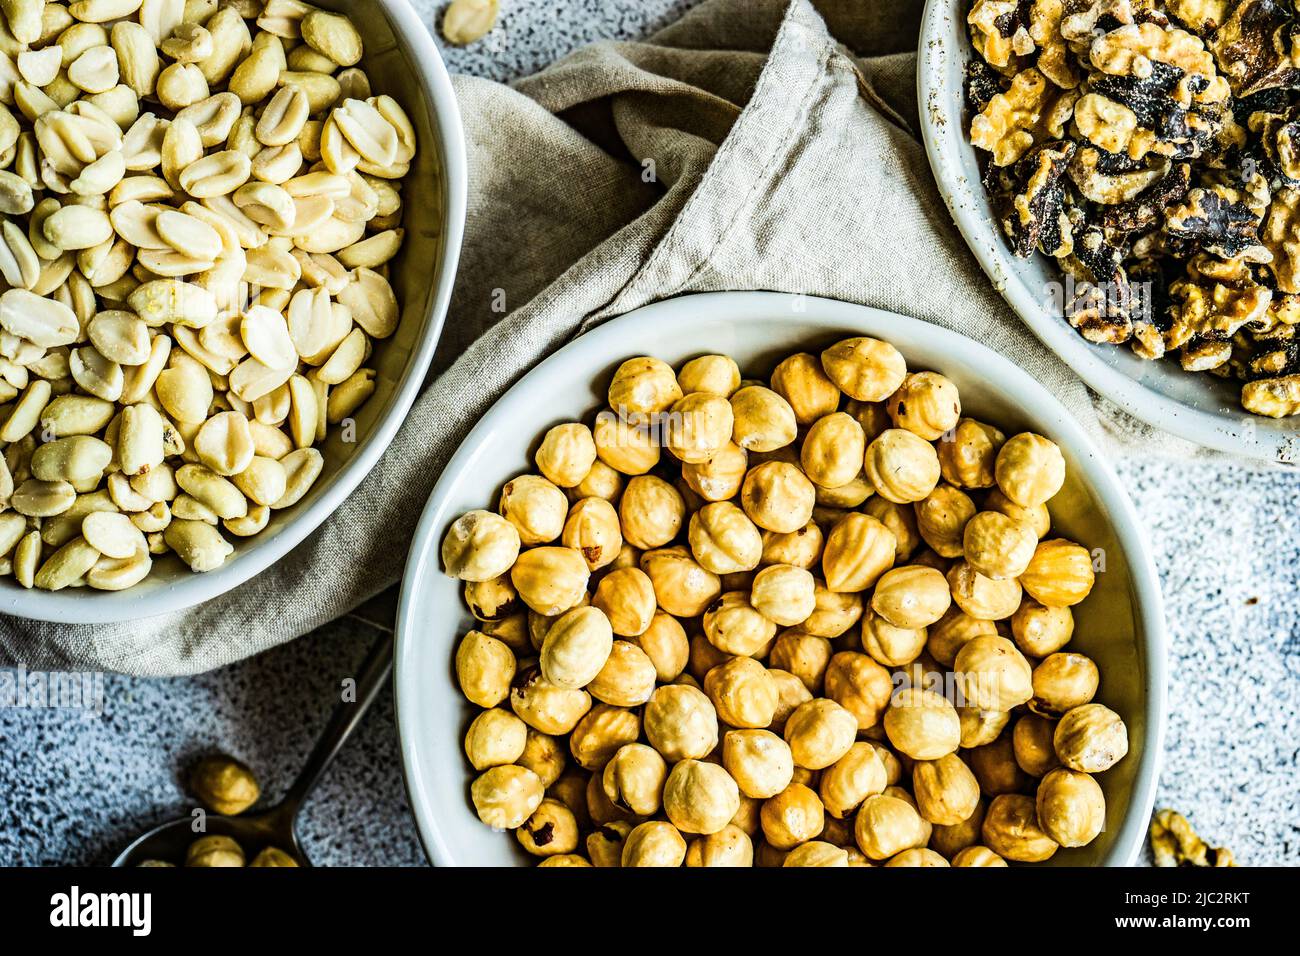 Overhead view of three bowls of hazelnuts, walnuts and peanuts Stock Photo